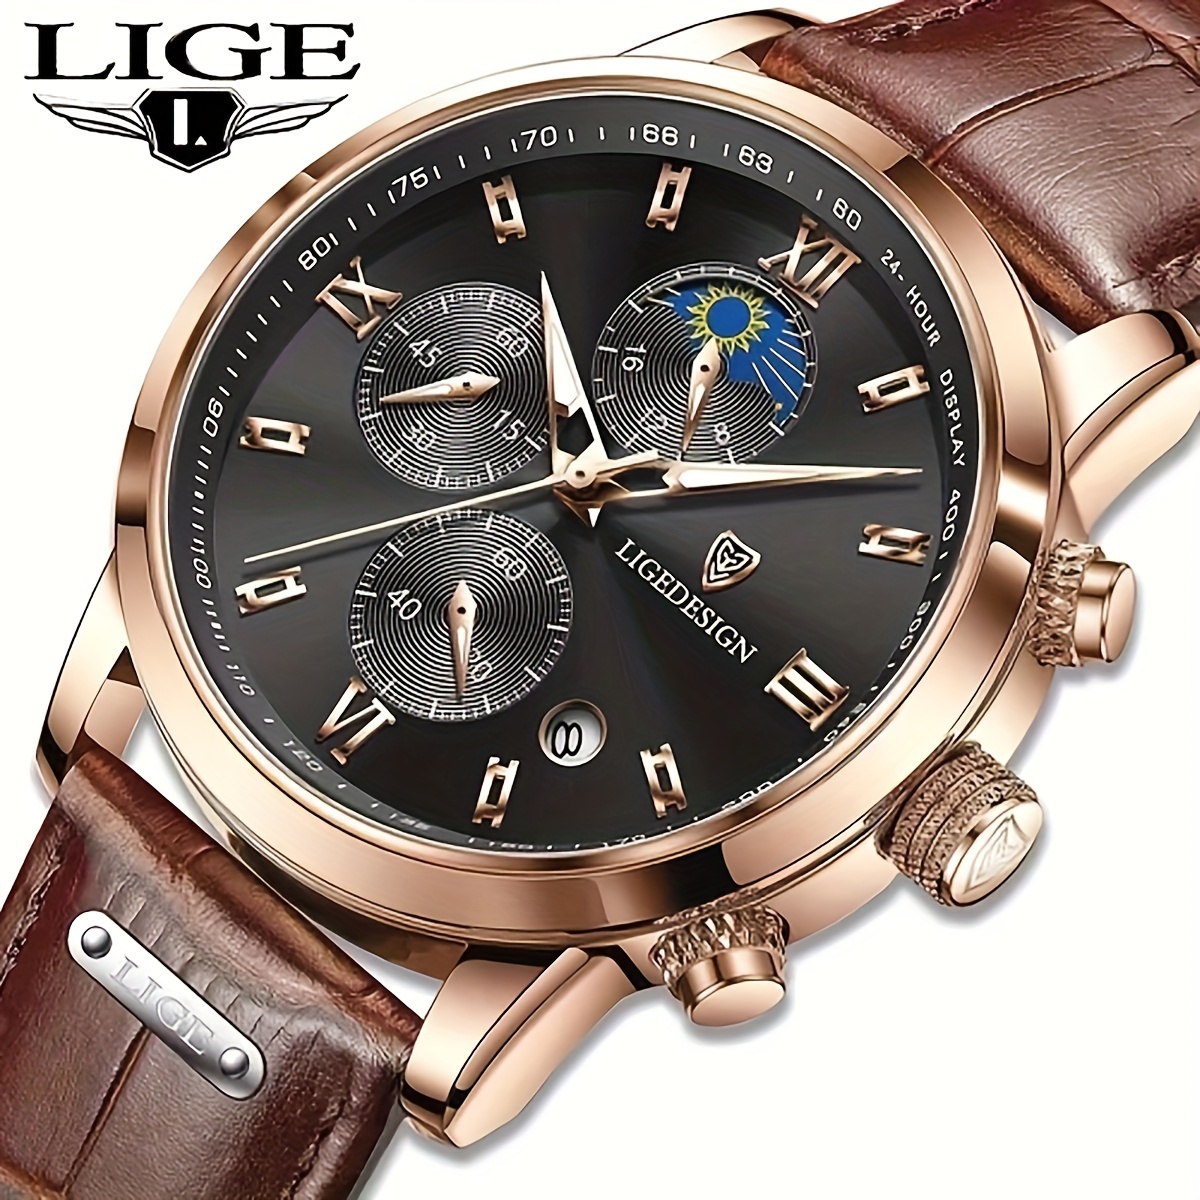 Reward Casual Sport Watches for Men Top Brand Luxury Military Waterproof Wrist Watch Man Clock Fashion Chronograph Wristwatch,Temu